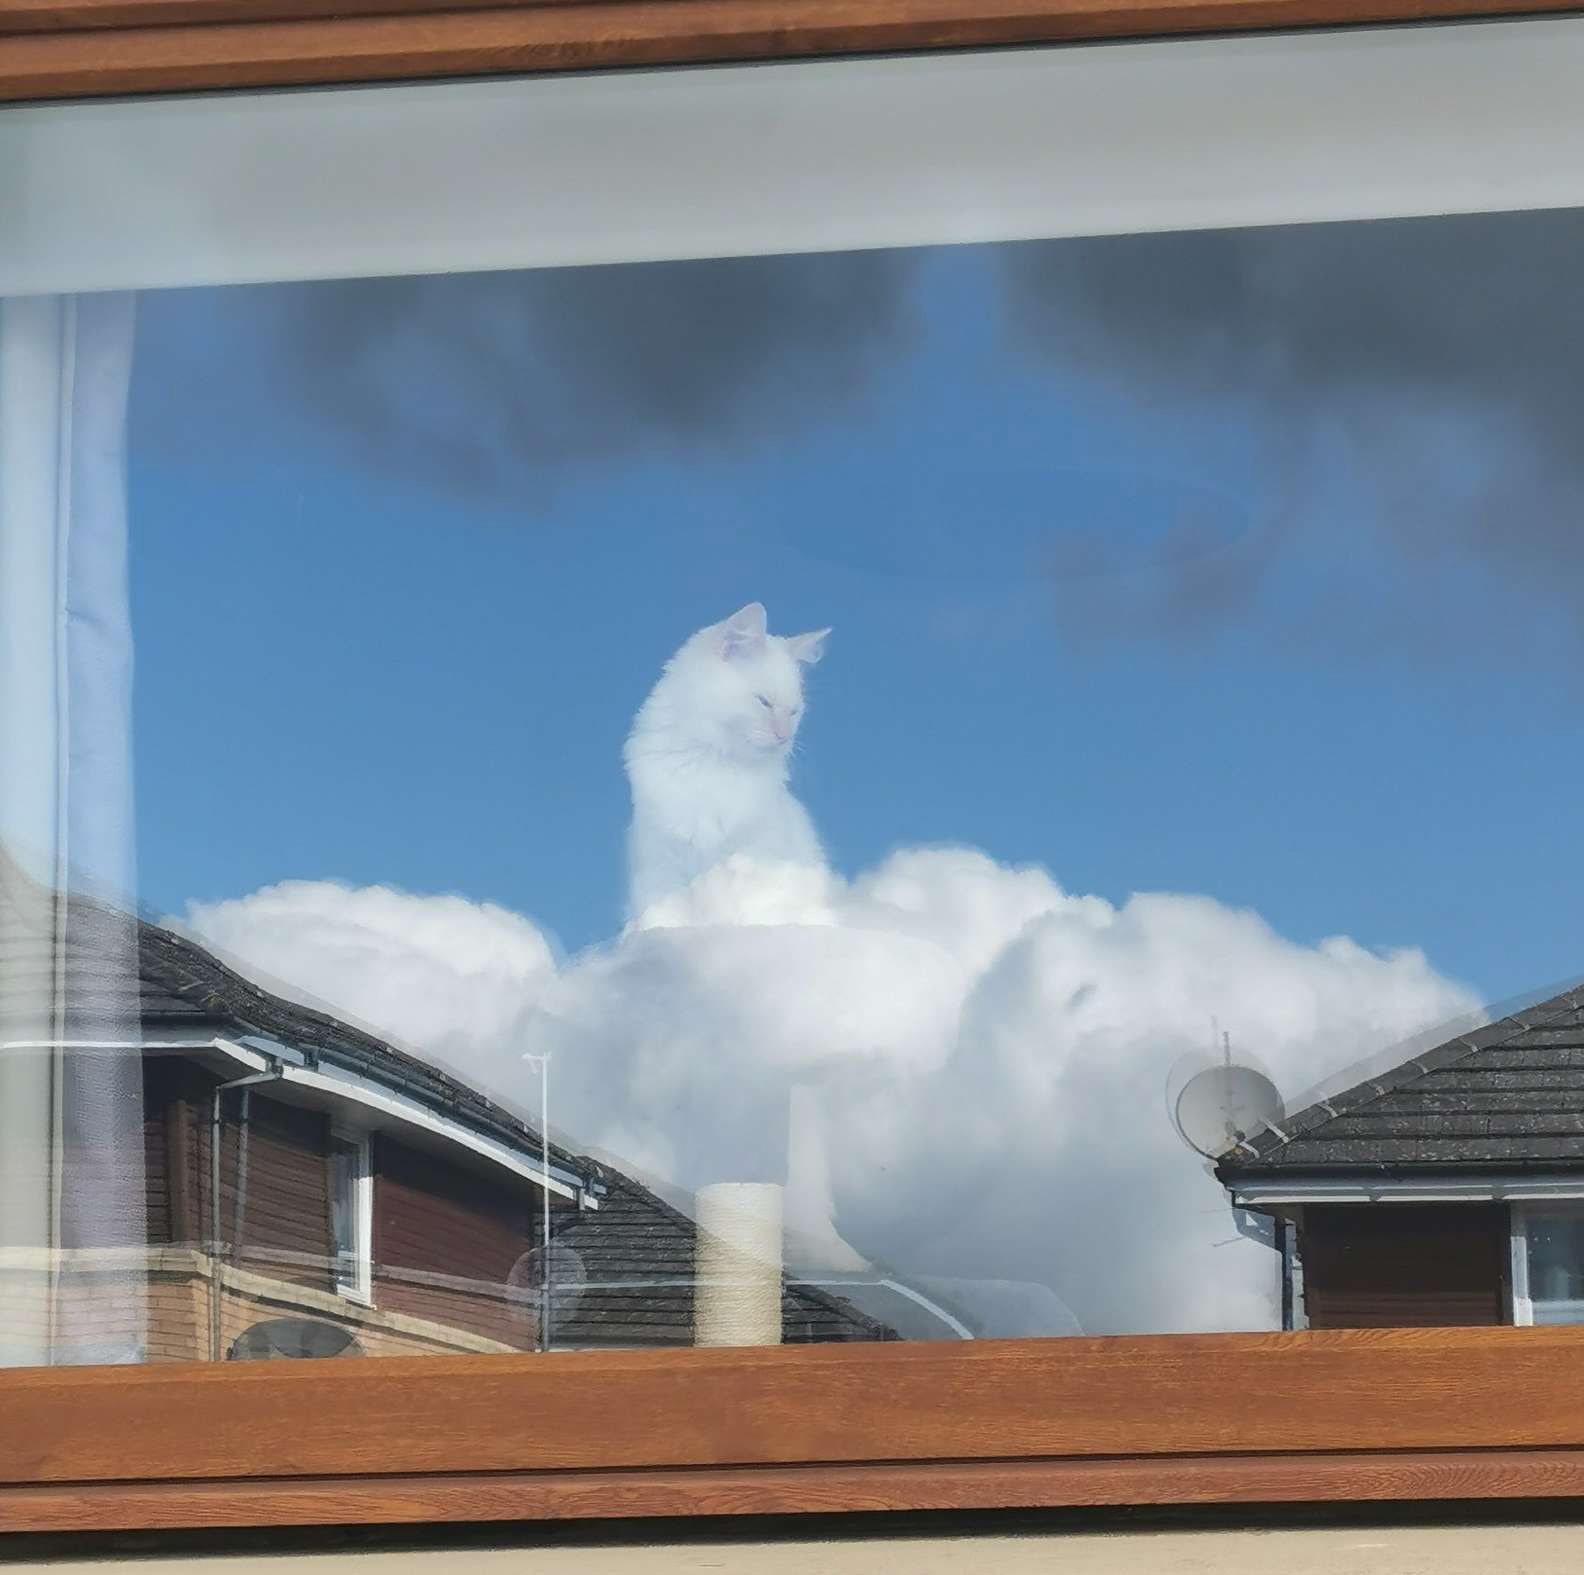 Gatinho observa o mundo nuvens